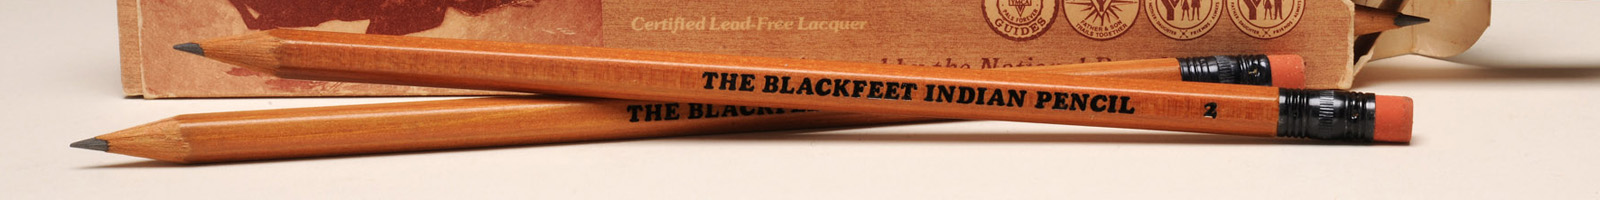 Image of Blackfoot Indian Pencils